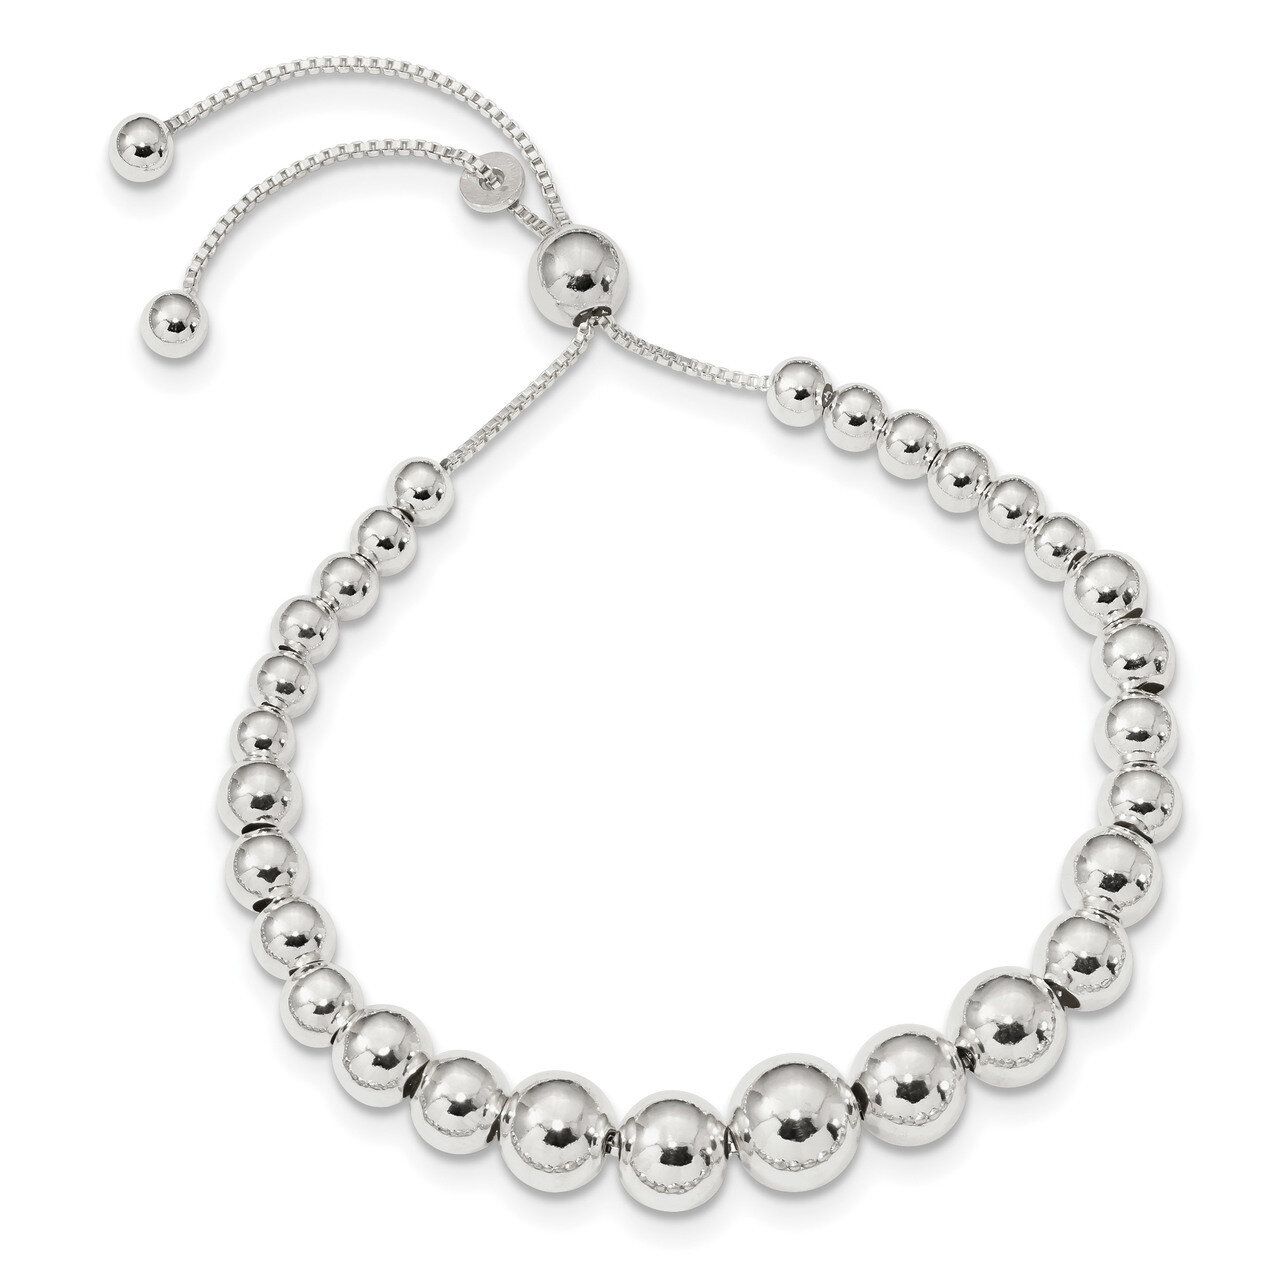 Graduated Beads Adjustable Bracelet 8.5 Inch Sterling Silver QG4548-8.5